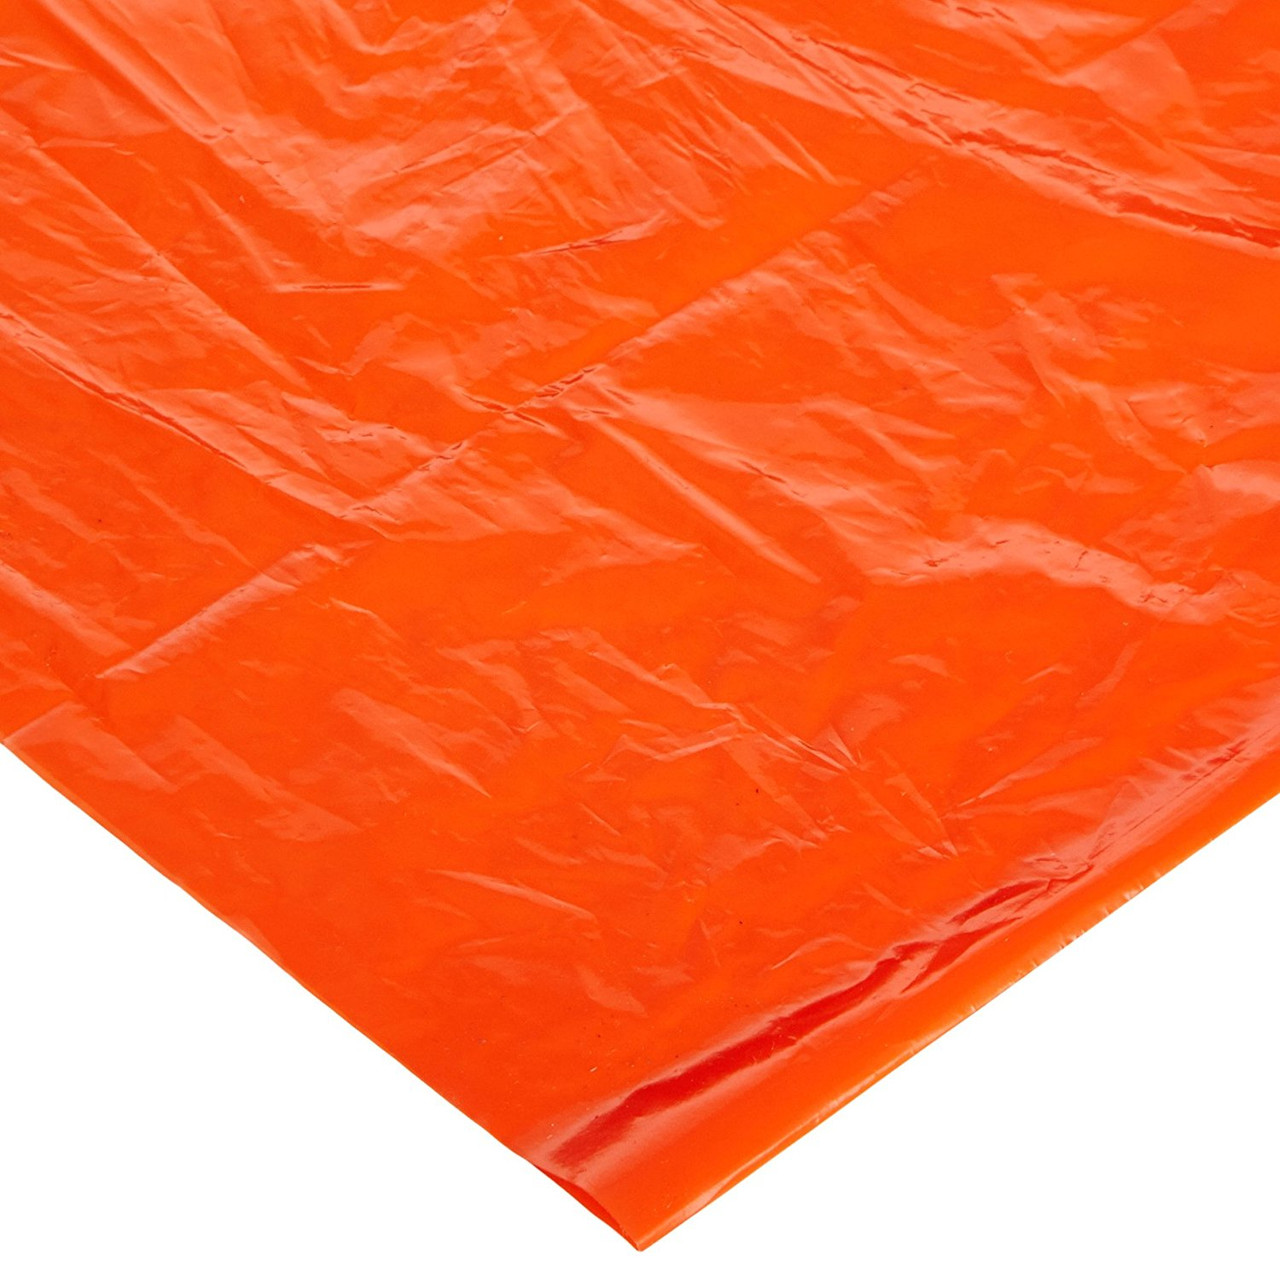 Tube d'urgence Tente Survie Orange Shelter Rescue Camping Tente Film  d'aluminium Sac de couchage 